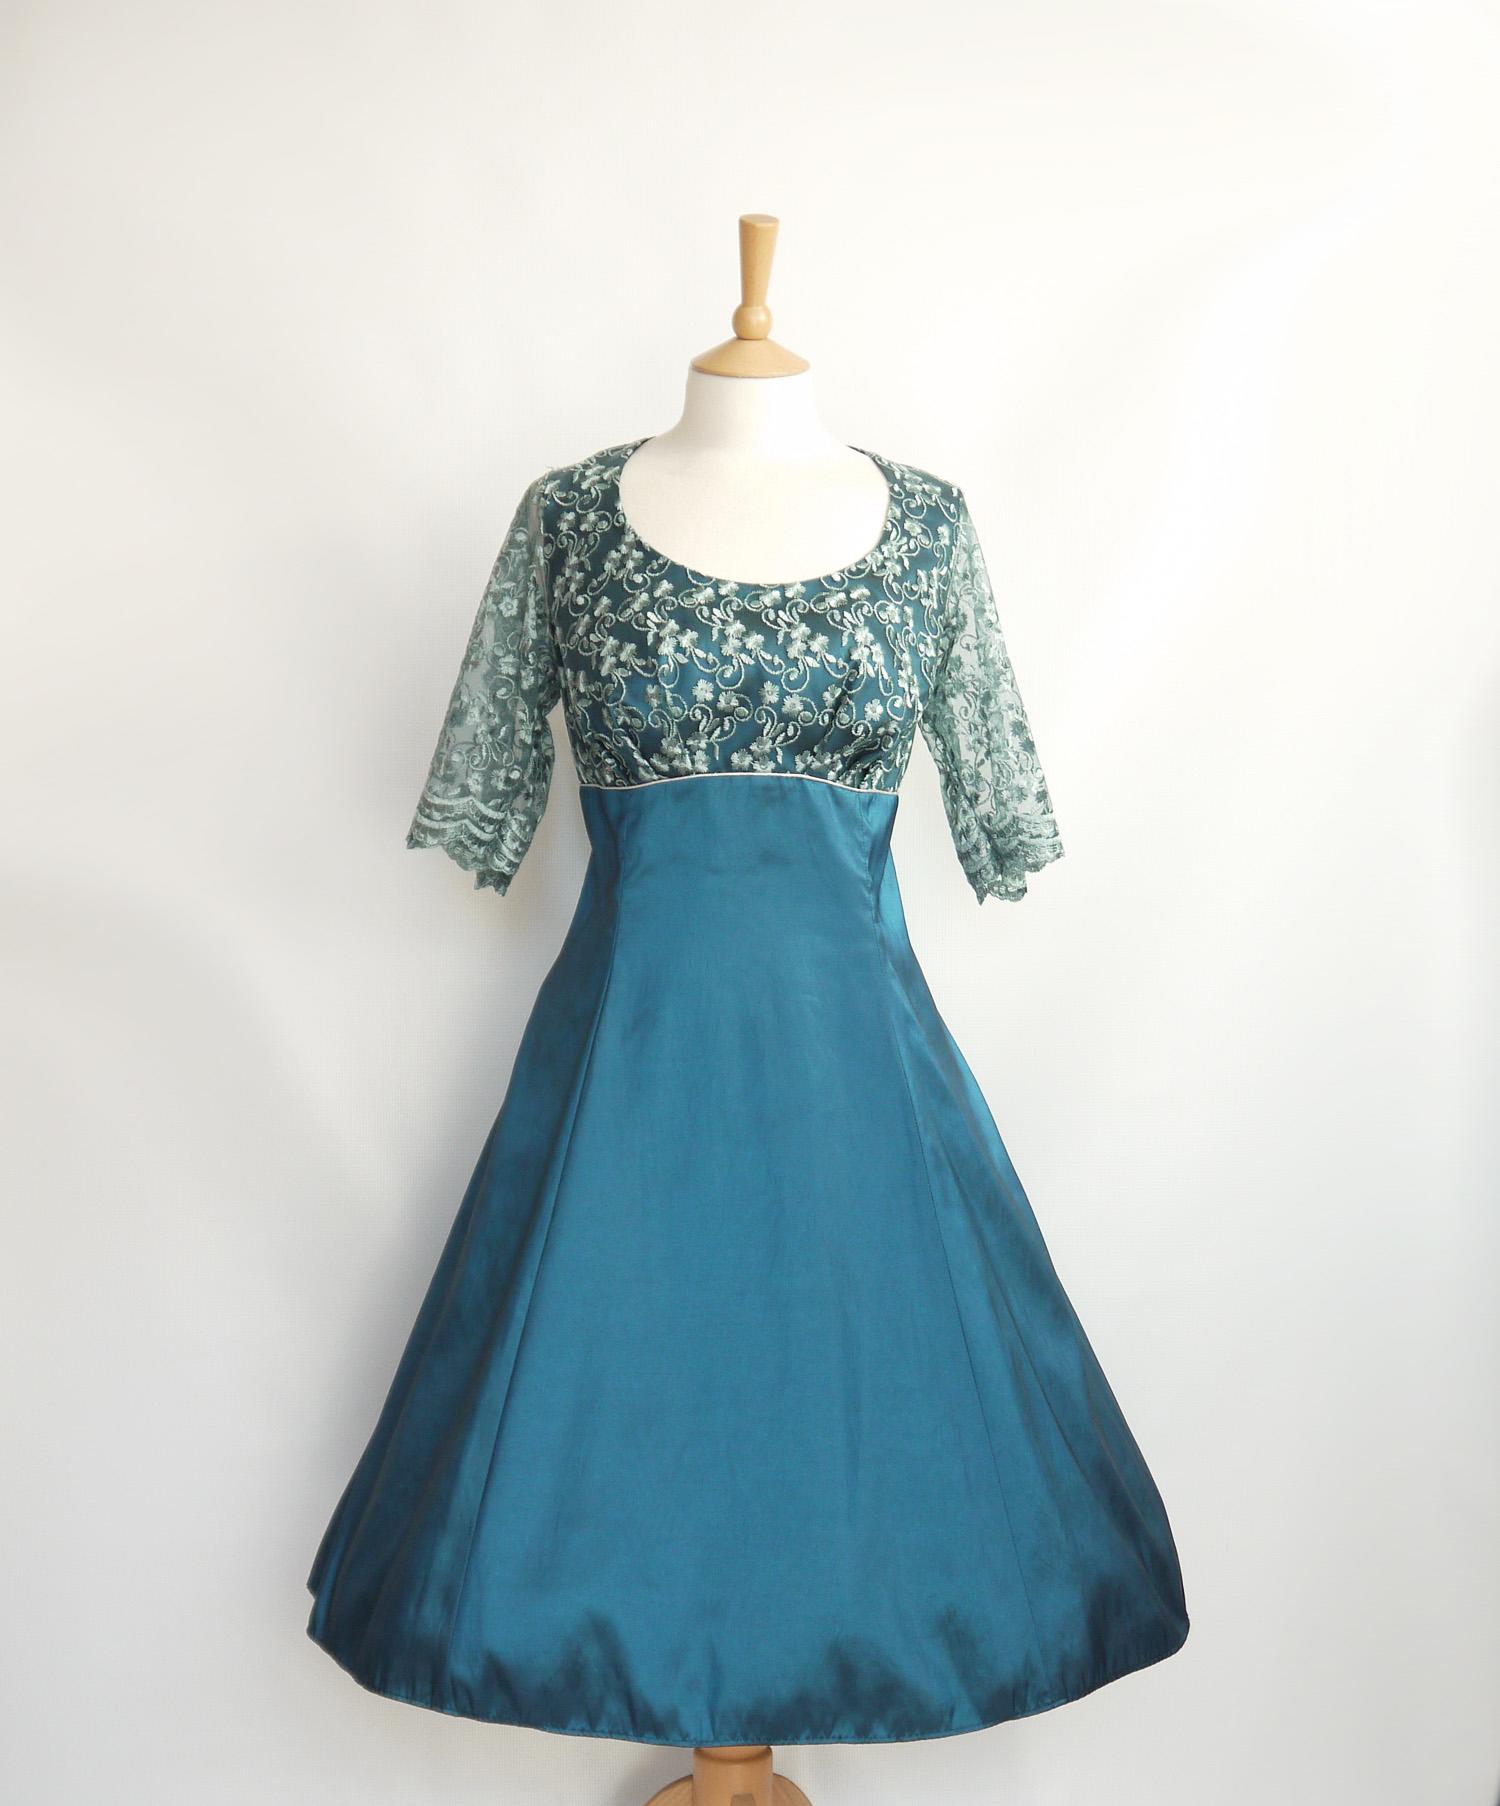 Size UK 20 - Teal Blue Shot Taffeta & Lace Evening Dress